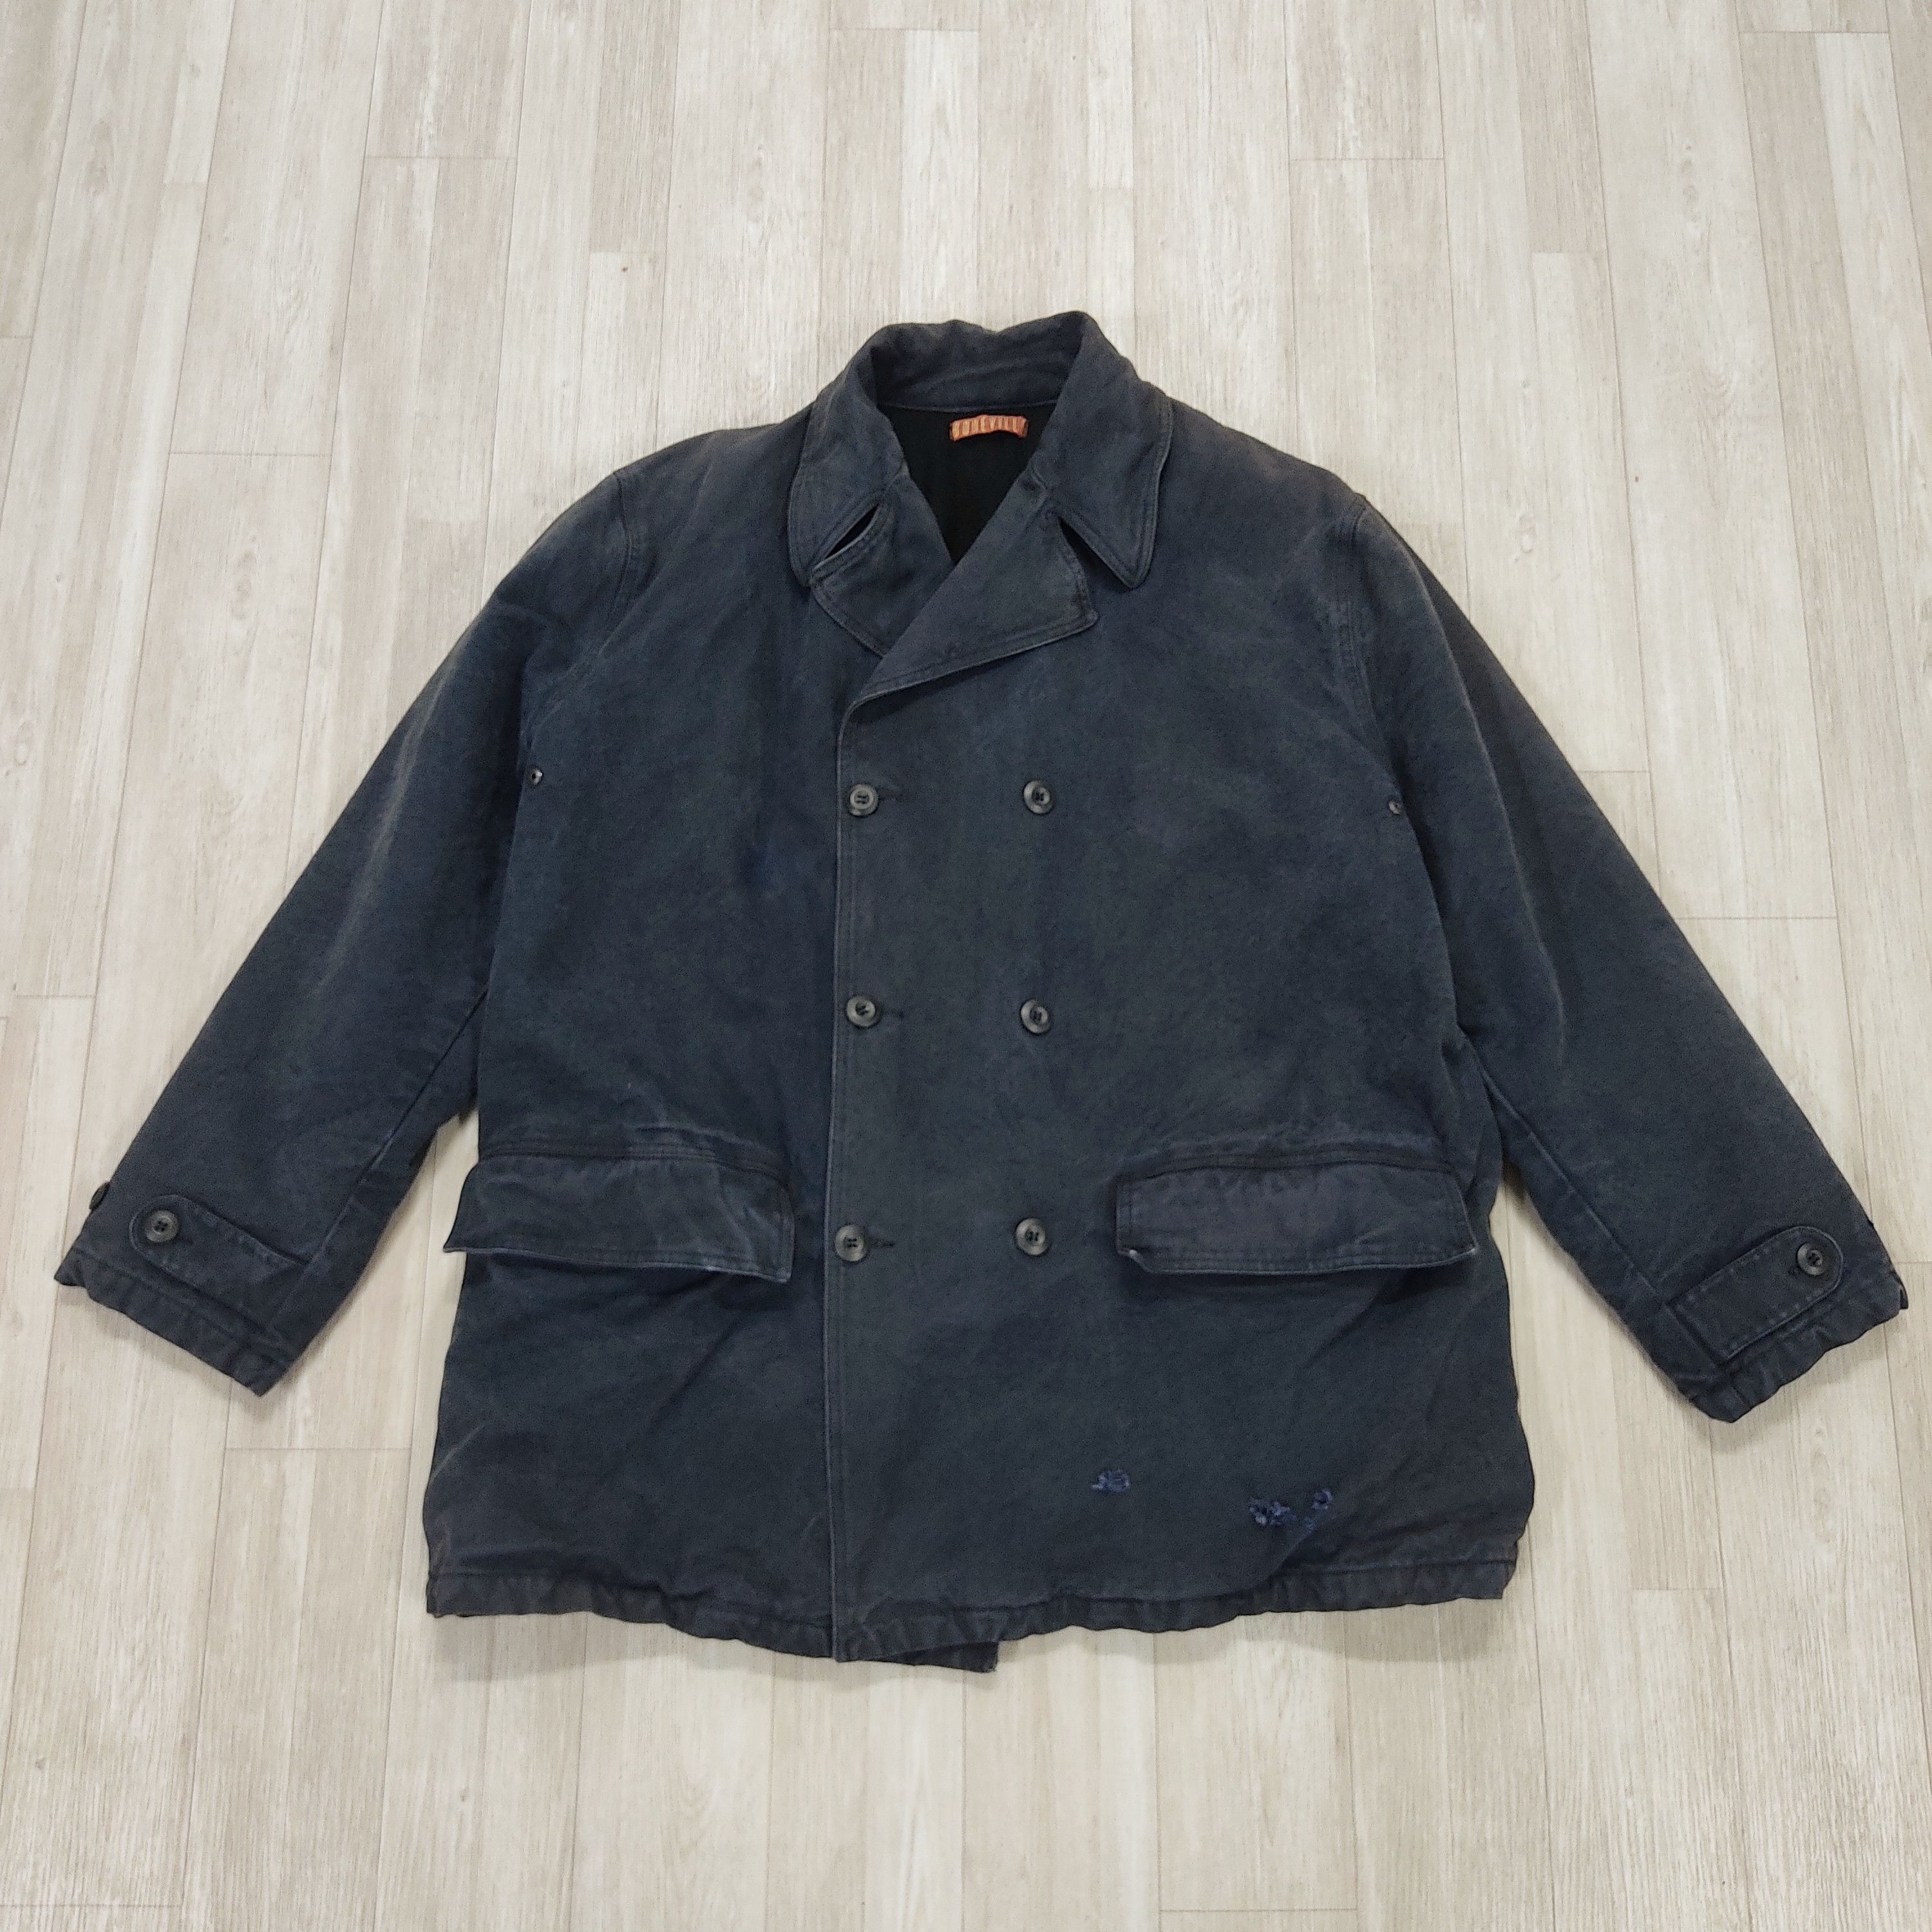 Vintage BONEVILLE AW94 Heavy Cotton Wool Jacket - 2